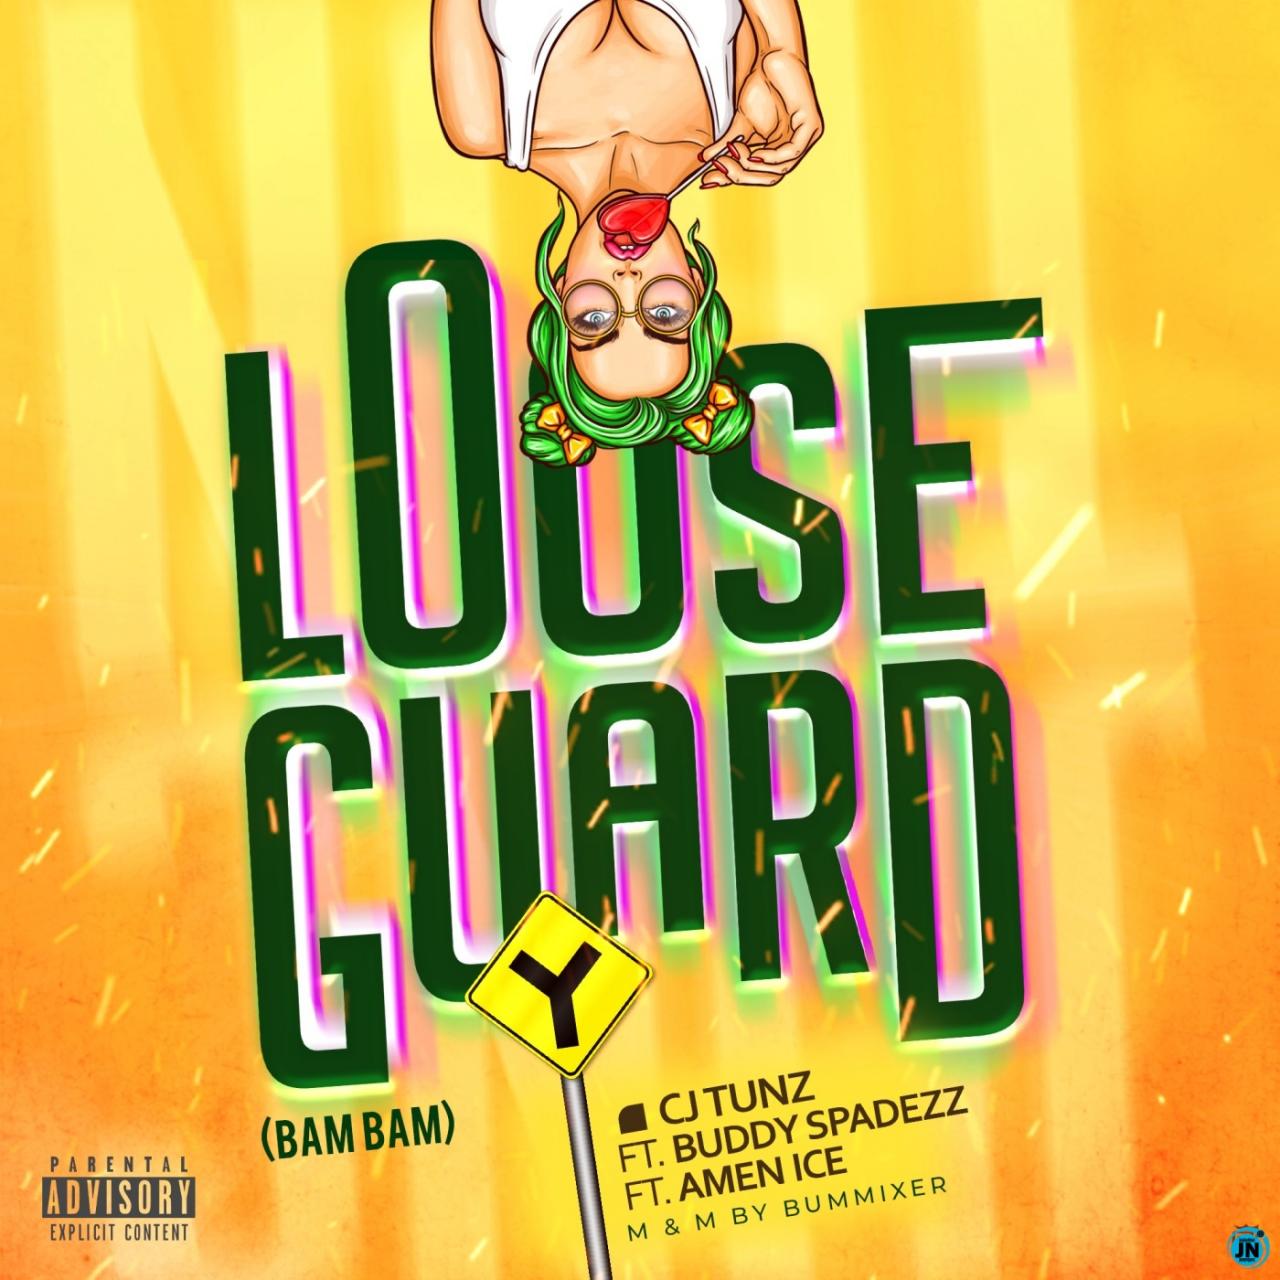 CJ Tunz - Loose Guard (Bam Bam) ft. Buddy Spadezz & Amen Ice